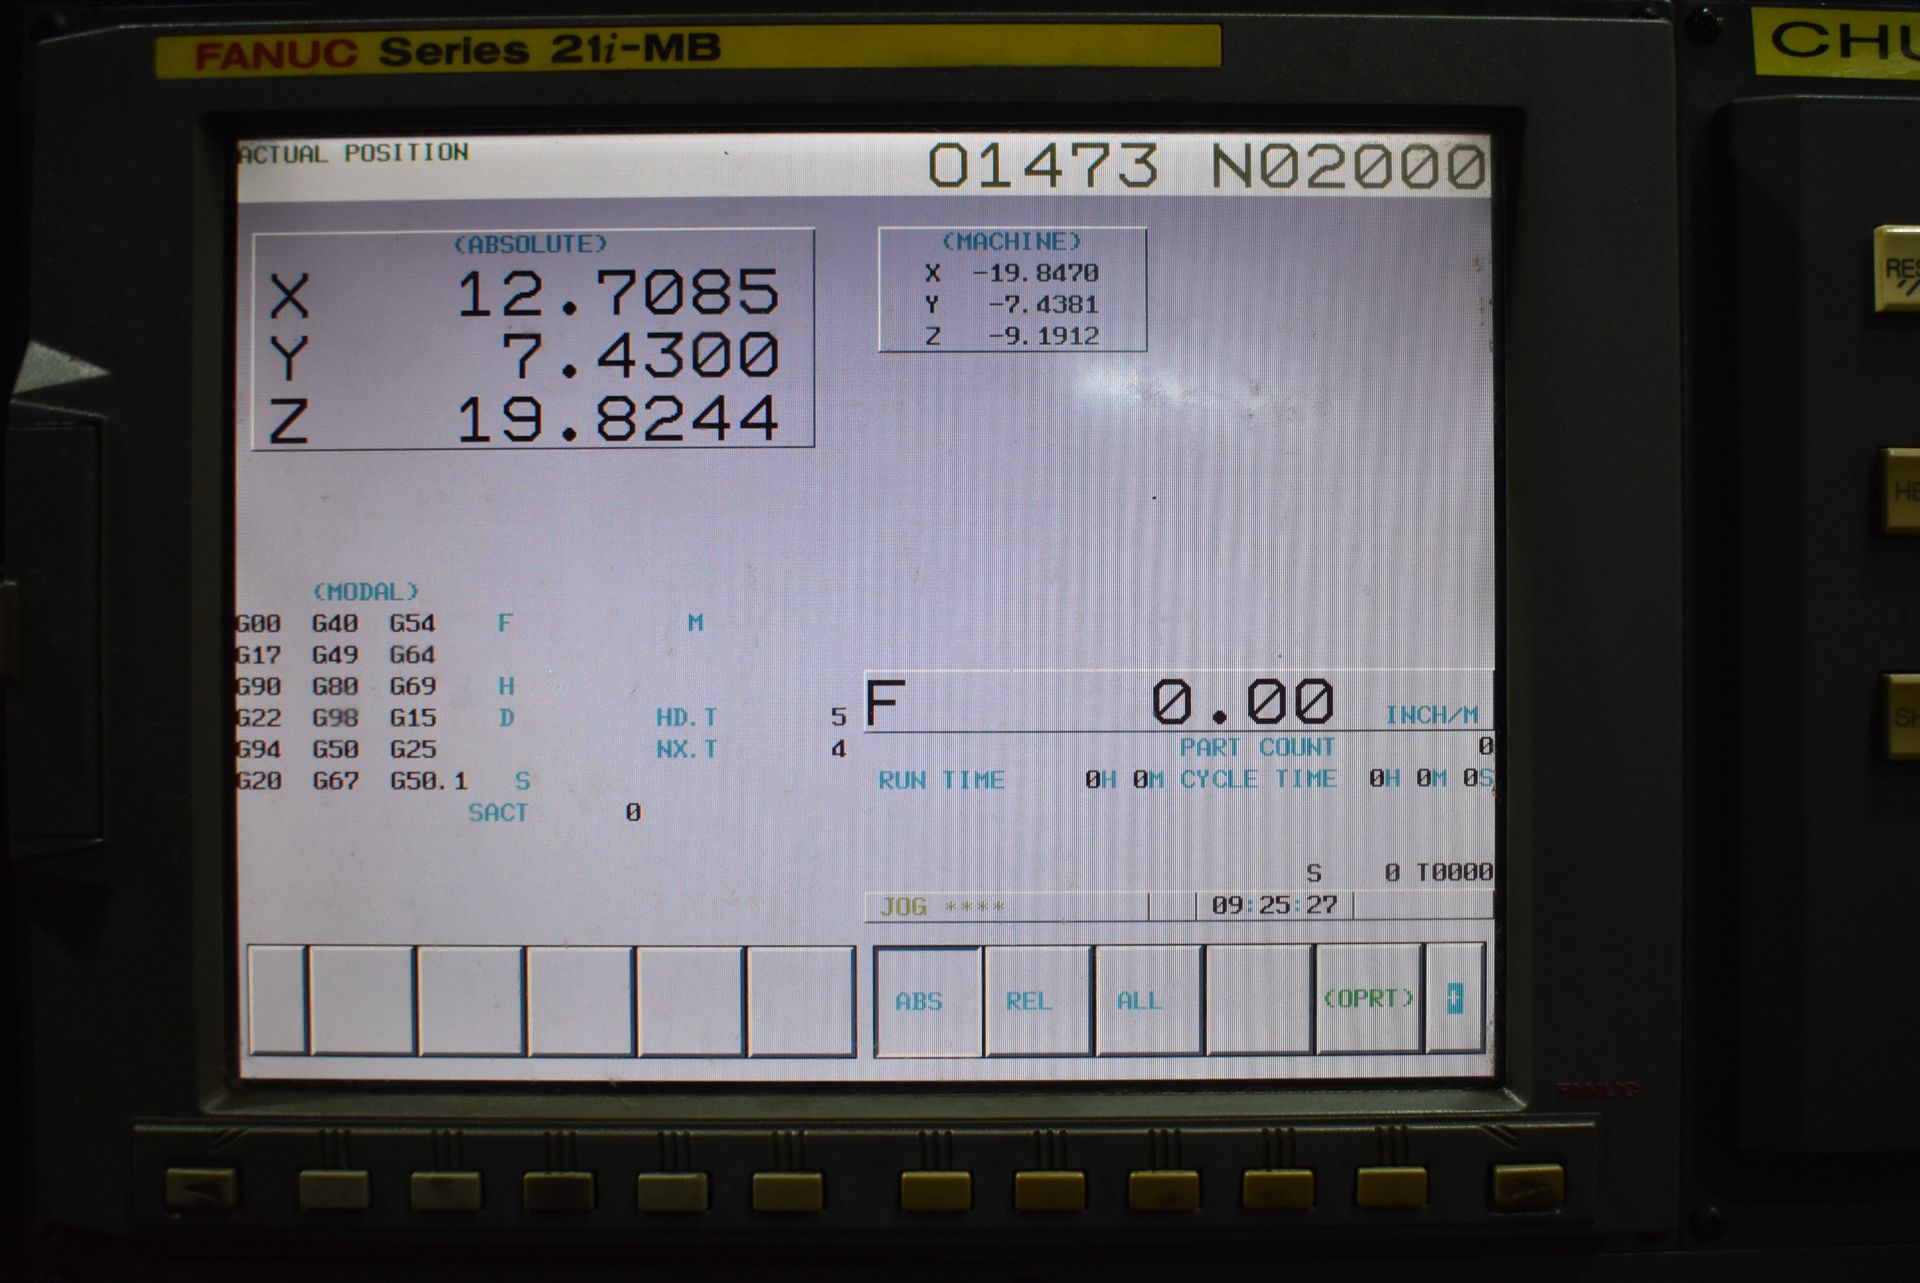 DOOSAN (2007) MV4020/50 CNC VERTICAL MACHINING CENTER WITH FANUC SERIES 2TI-MB CNC CONTROL, 47" - Image 2 of 13